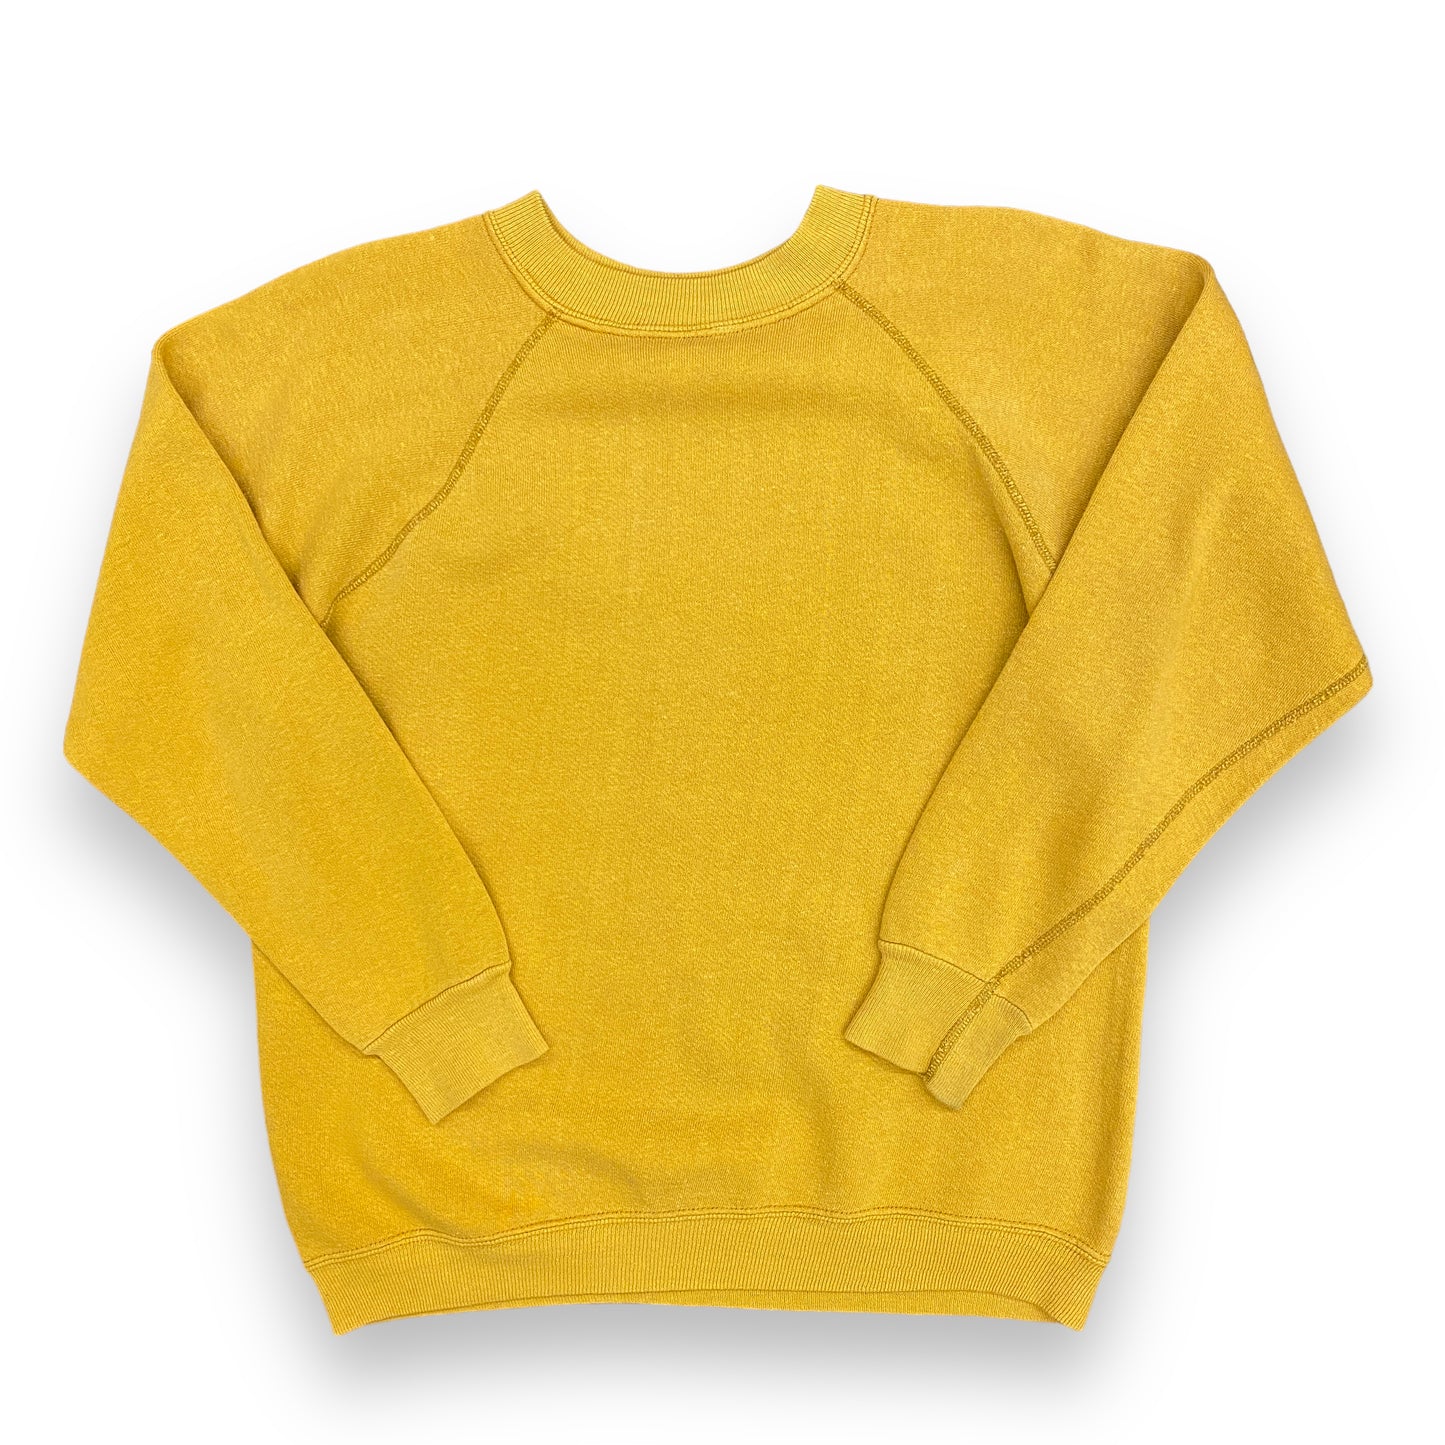 Vintage 1970s Gold Raglan Sweatshirt - Size Medium